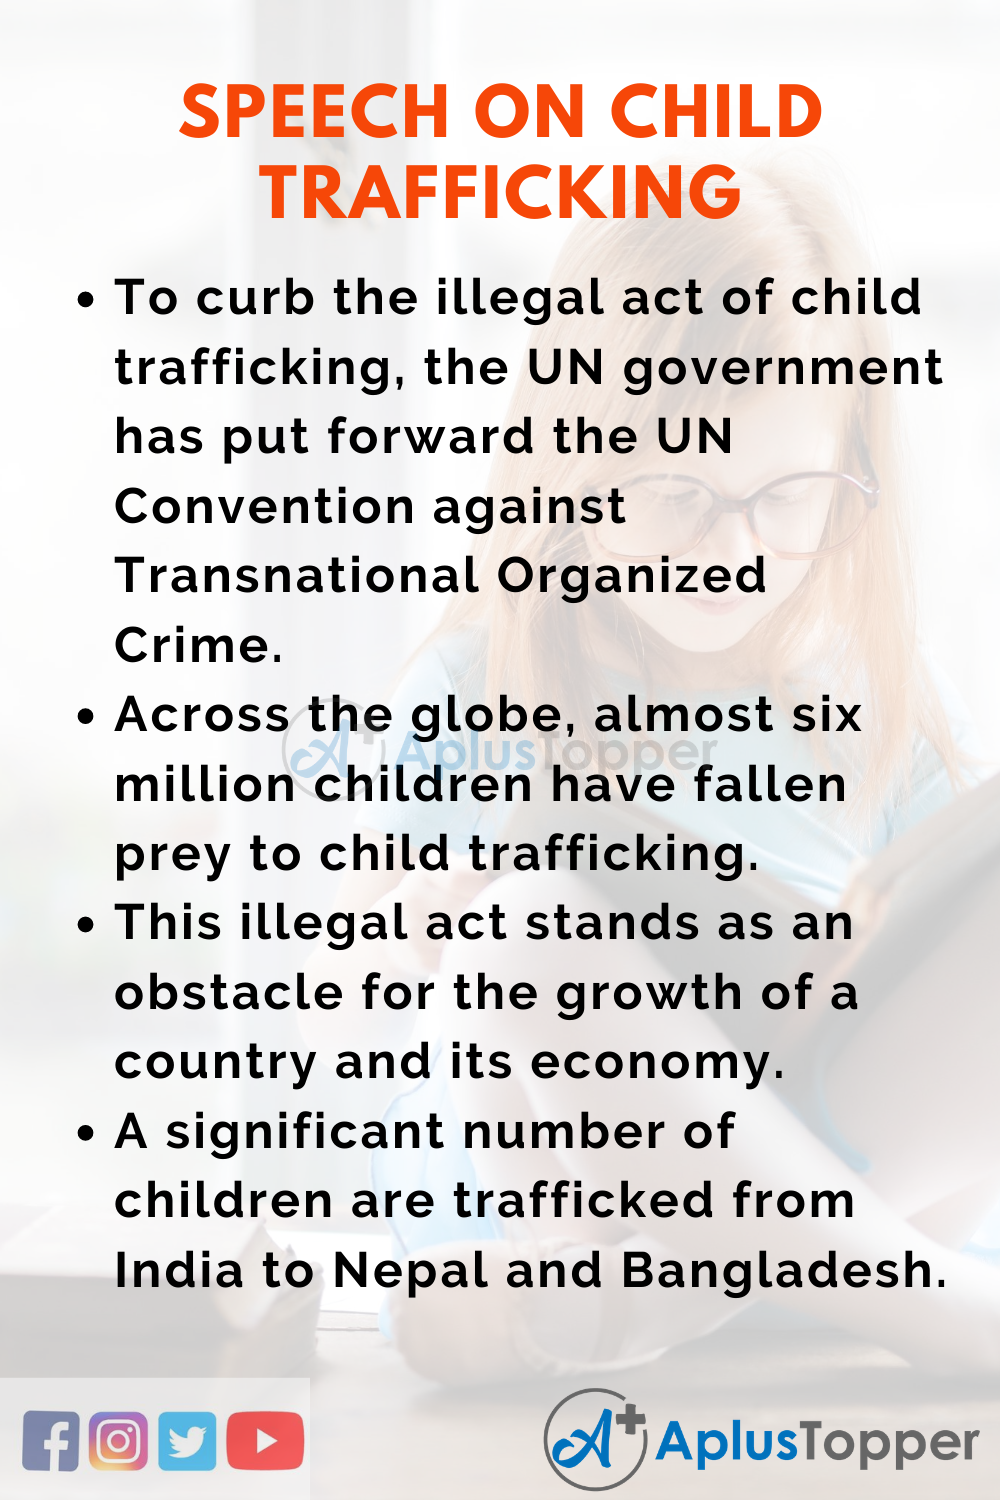 Short Speech On Child Trafficking 150 Words In English